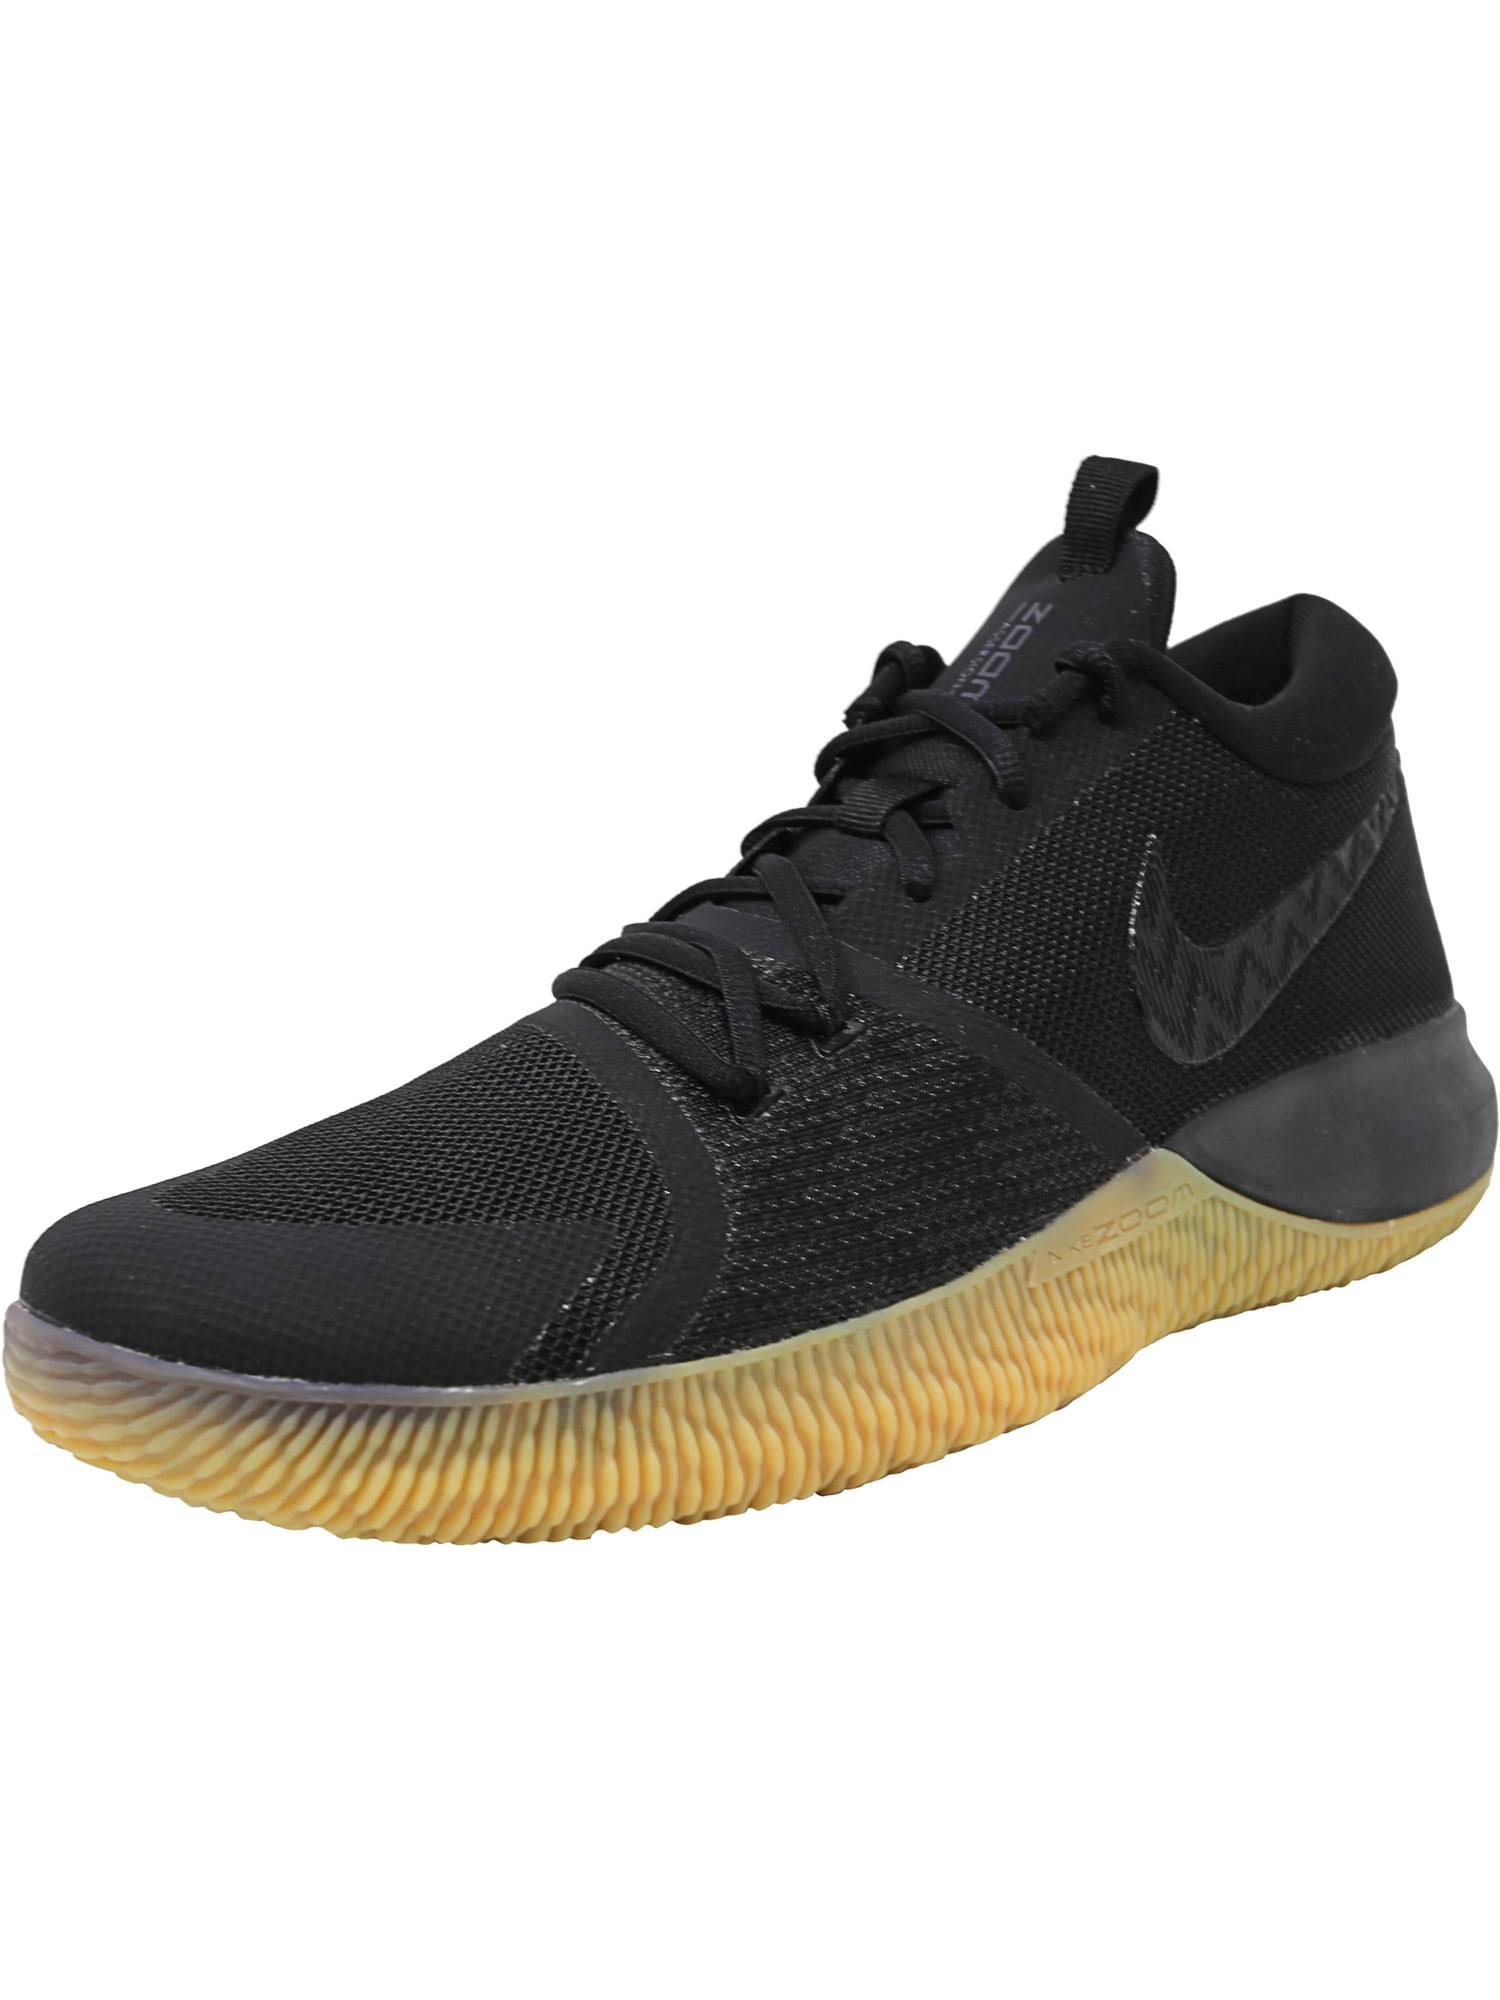 Nike Zoom Assersion Basketball Shoe 